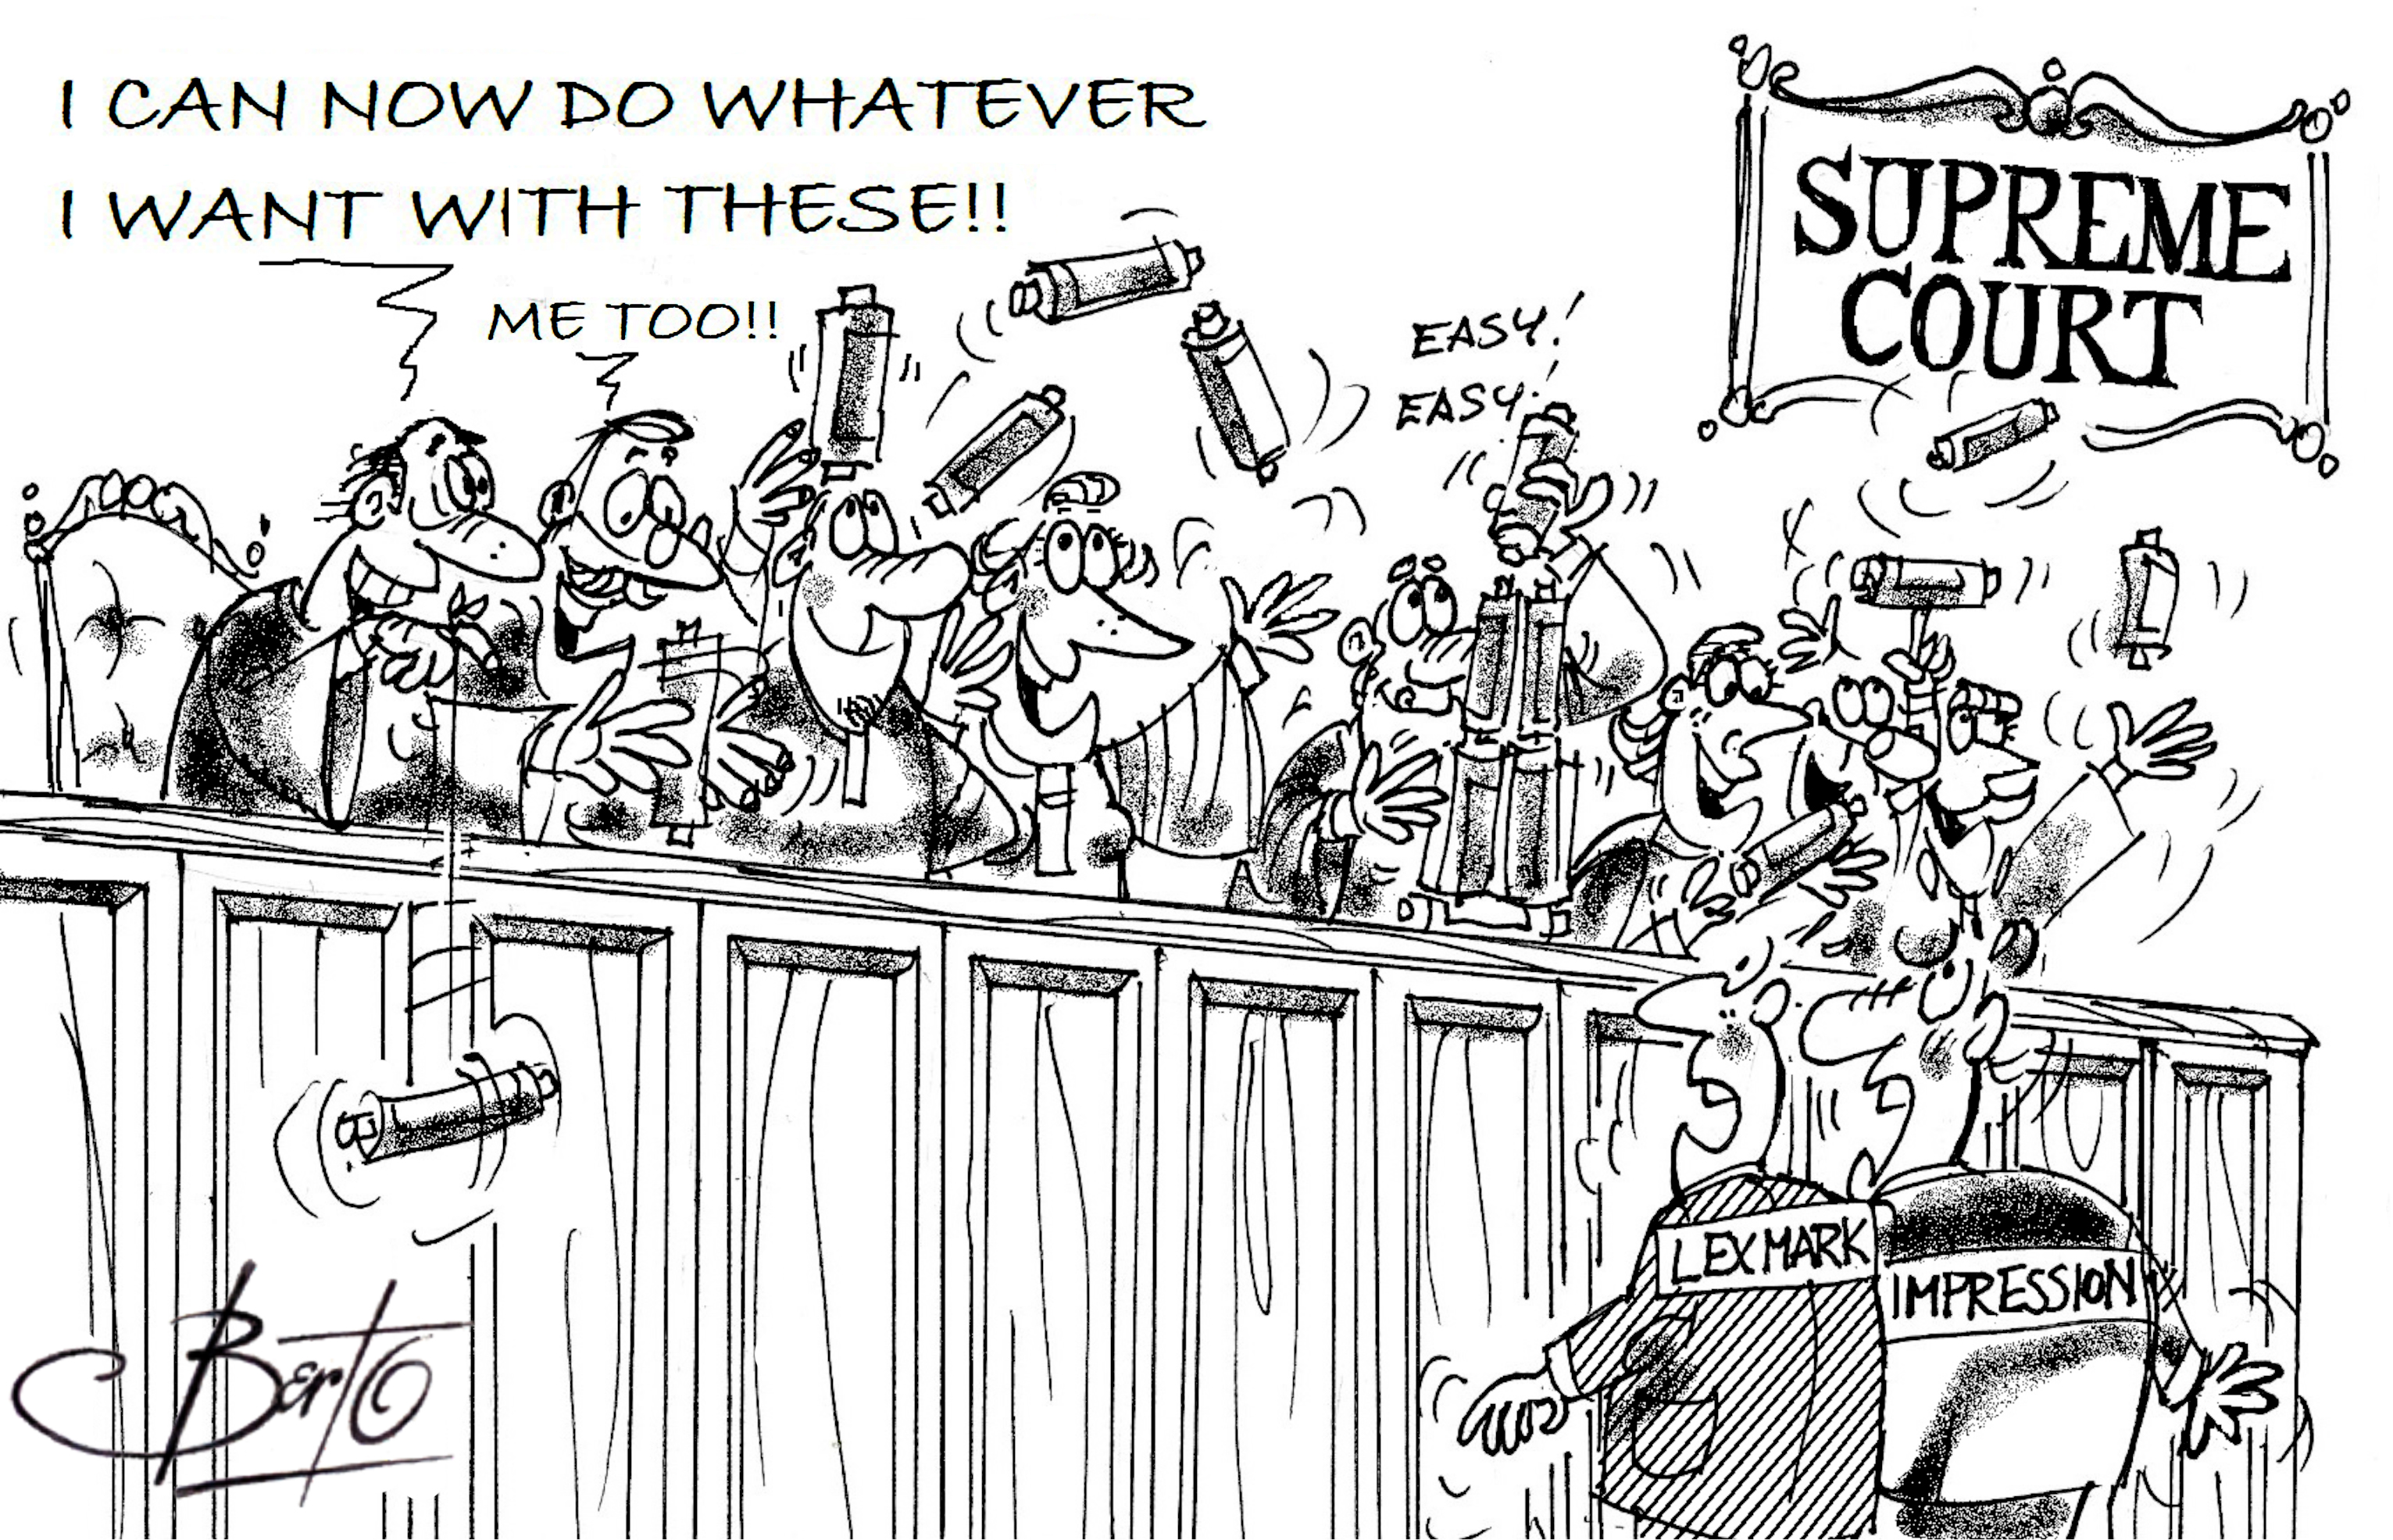 Rules Changed by Supreme Court Berto cartoon rtmworld